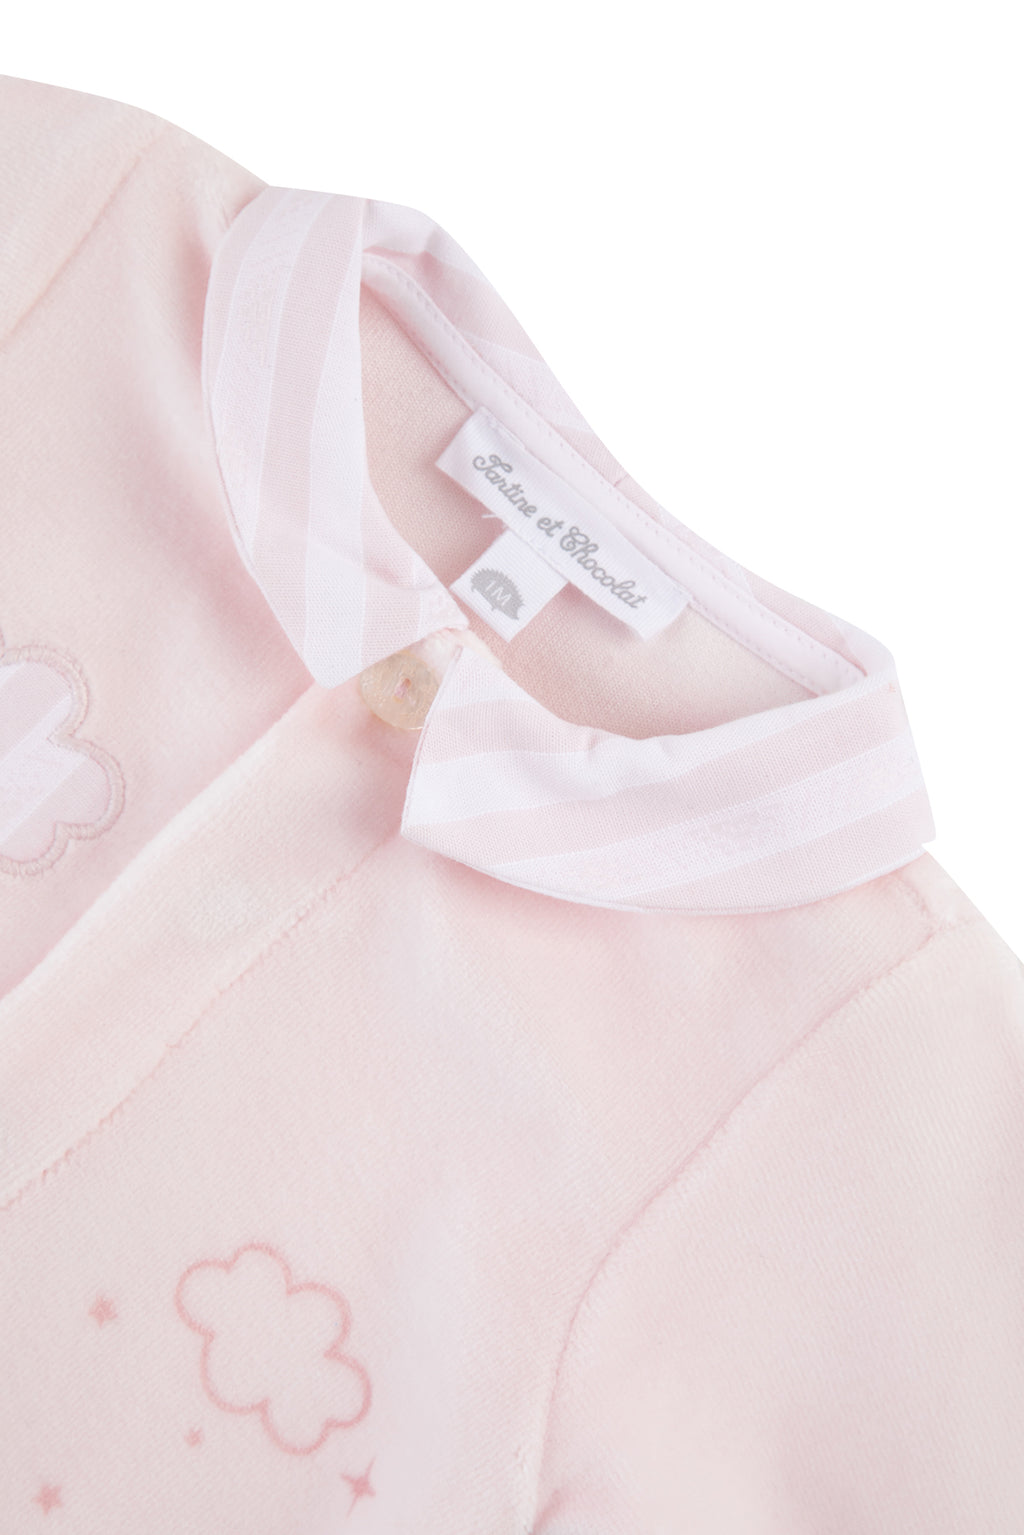 Pyjama - Rose pâle velours illustration rêve